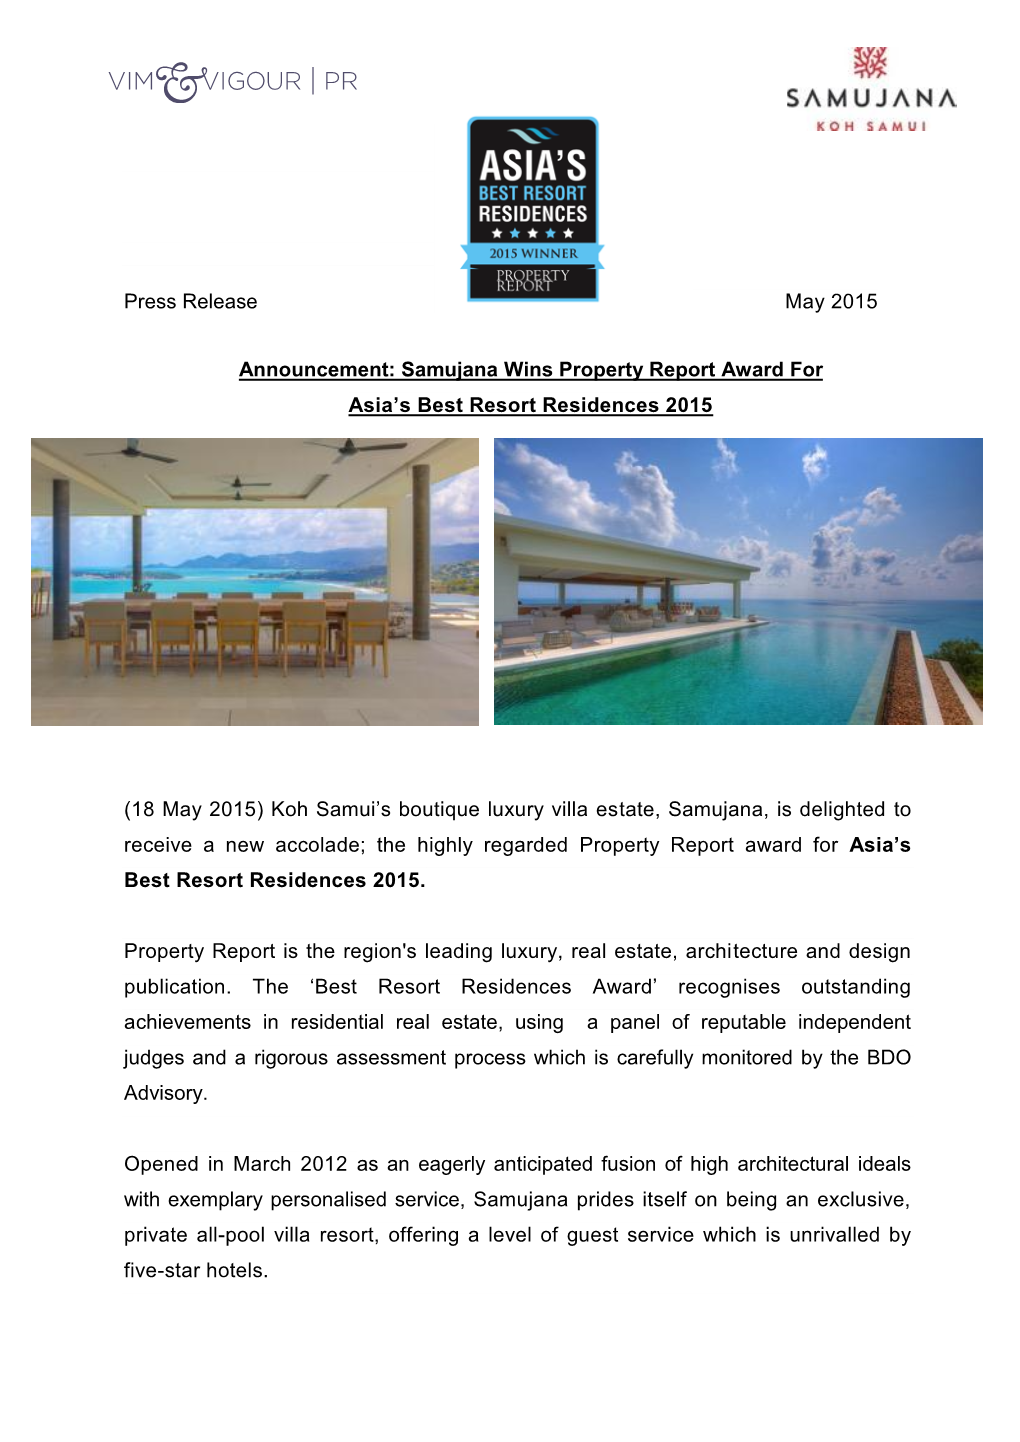 Samujana Wins Property Report Award for Asia's Best Resort